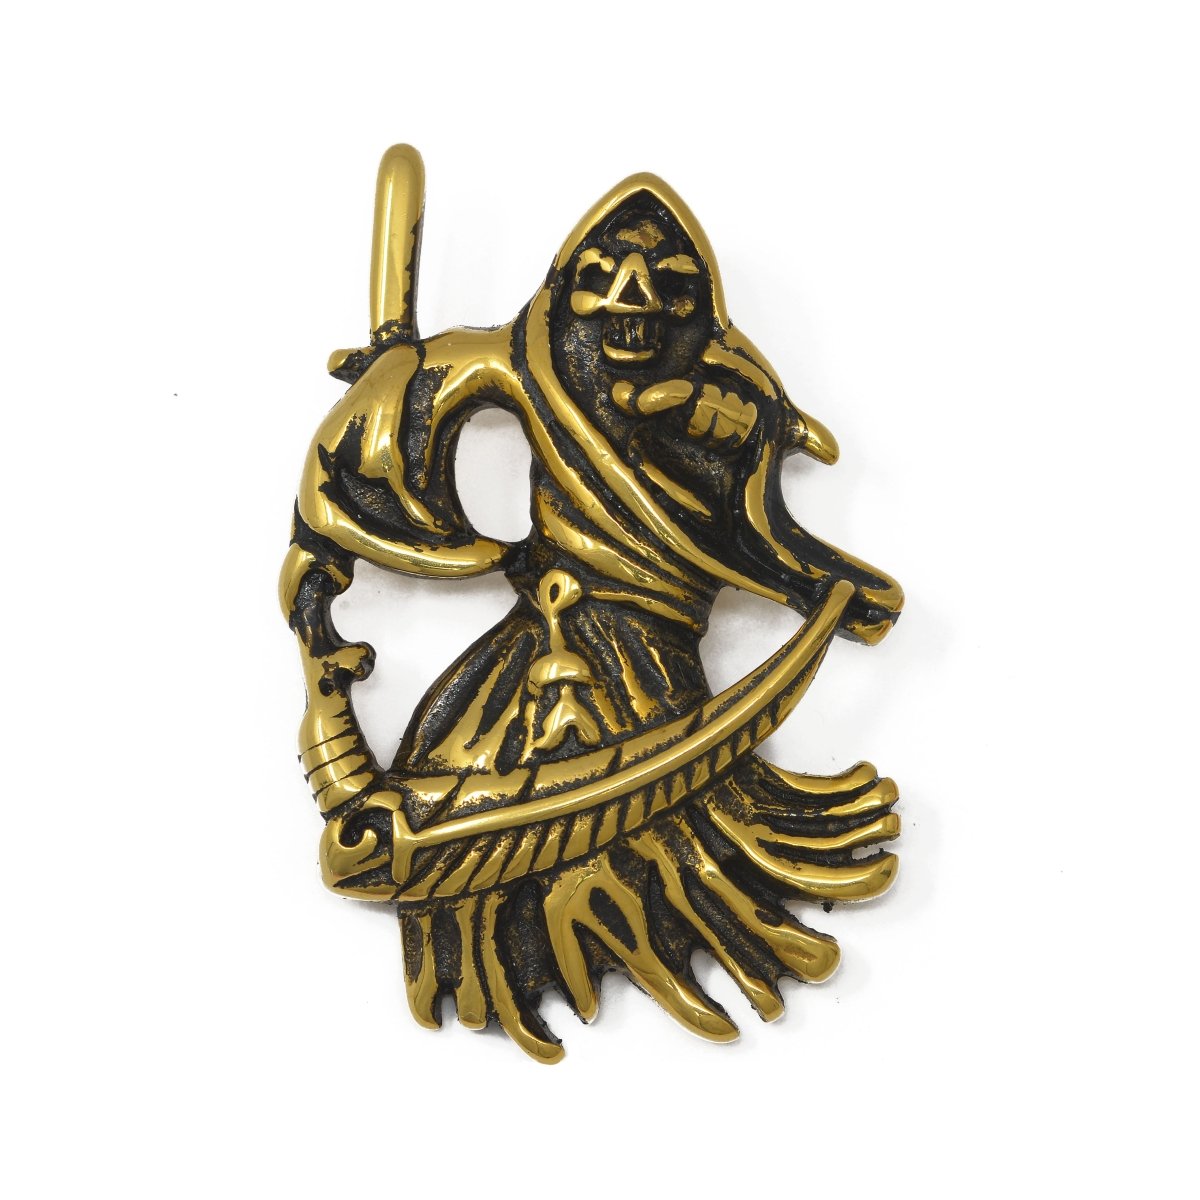 Antique Gold Grim Reaper Pendant Bold Angel of Death SANTA MUERTE Halloween Jewelry Necklace - DLUXCA